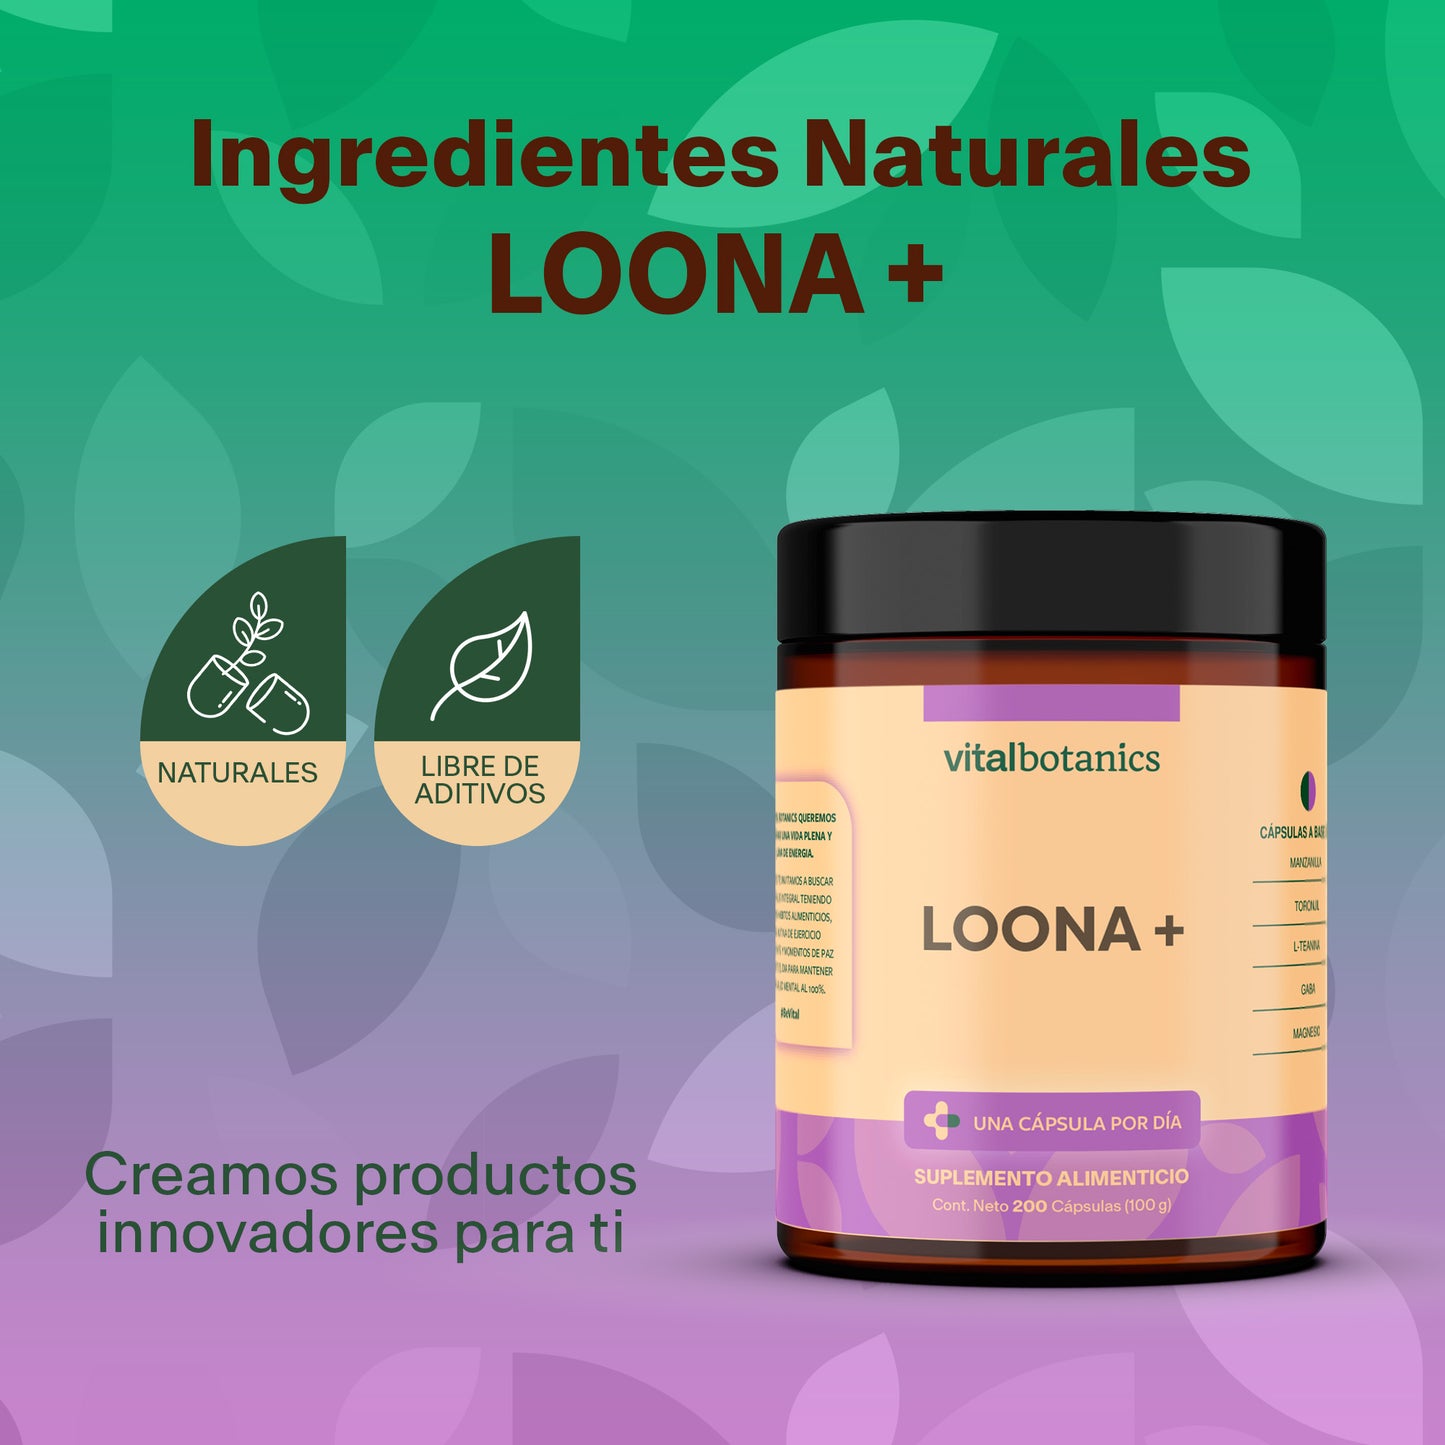 Sleep Enhancer | Pasiflora, Manzanilla, L-Teanina y Toronjil